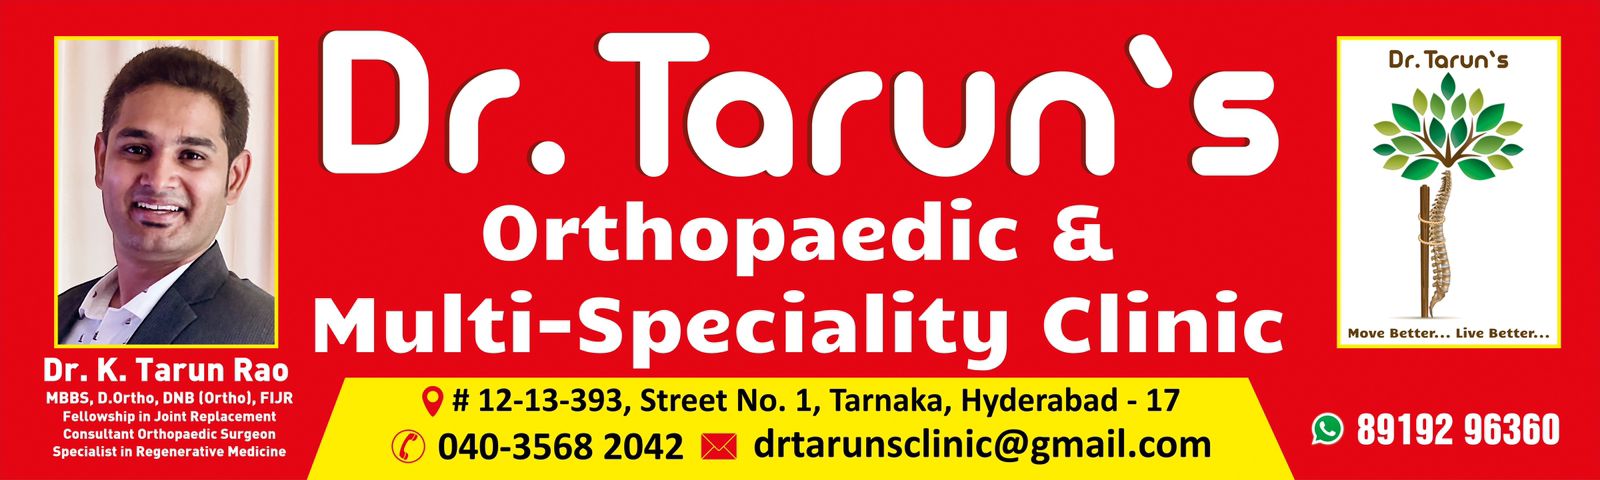 Dr.Tarun's Orthopaedic And Multi-Speciality Clinic - Tarnaka, Hyderabad